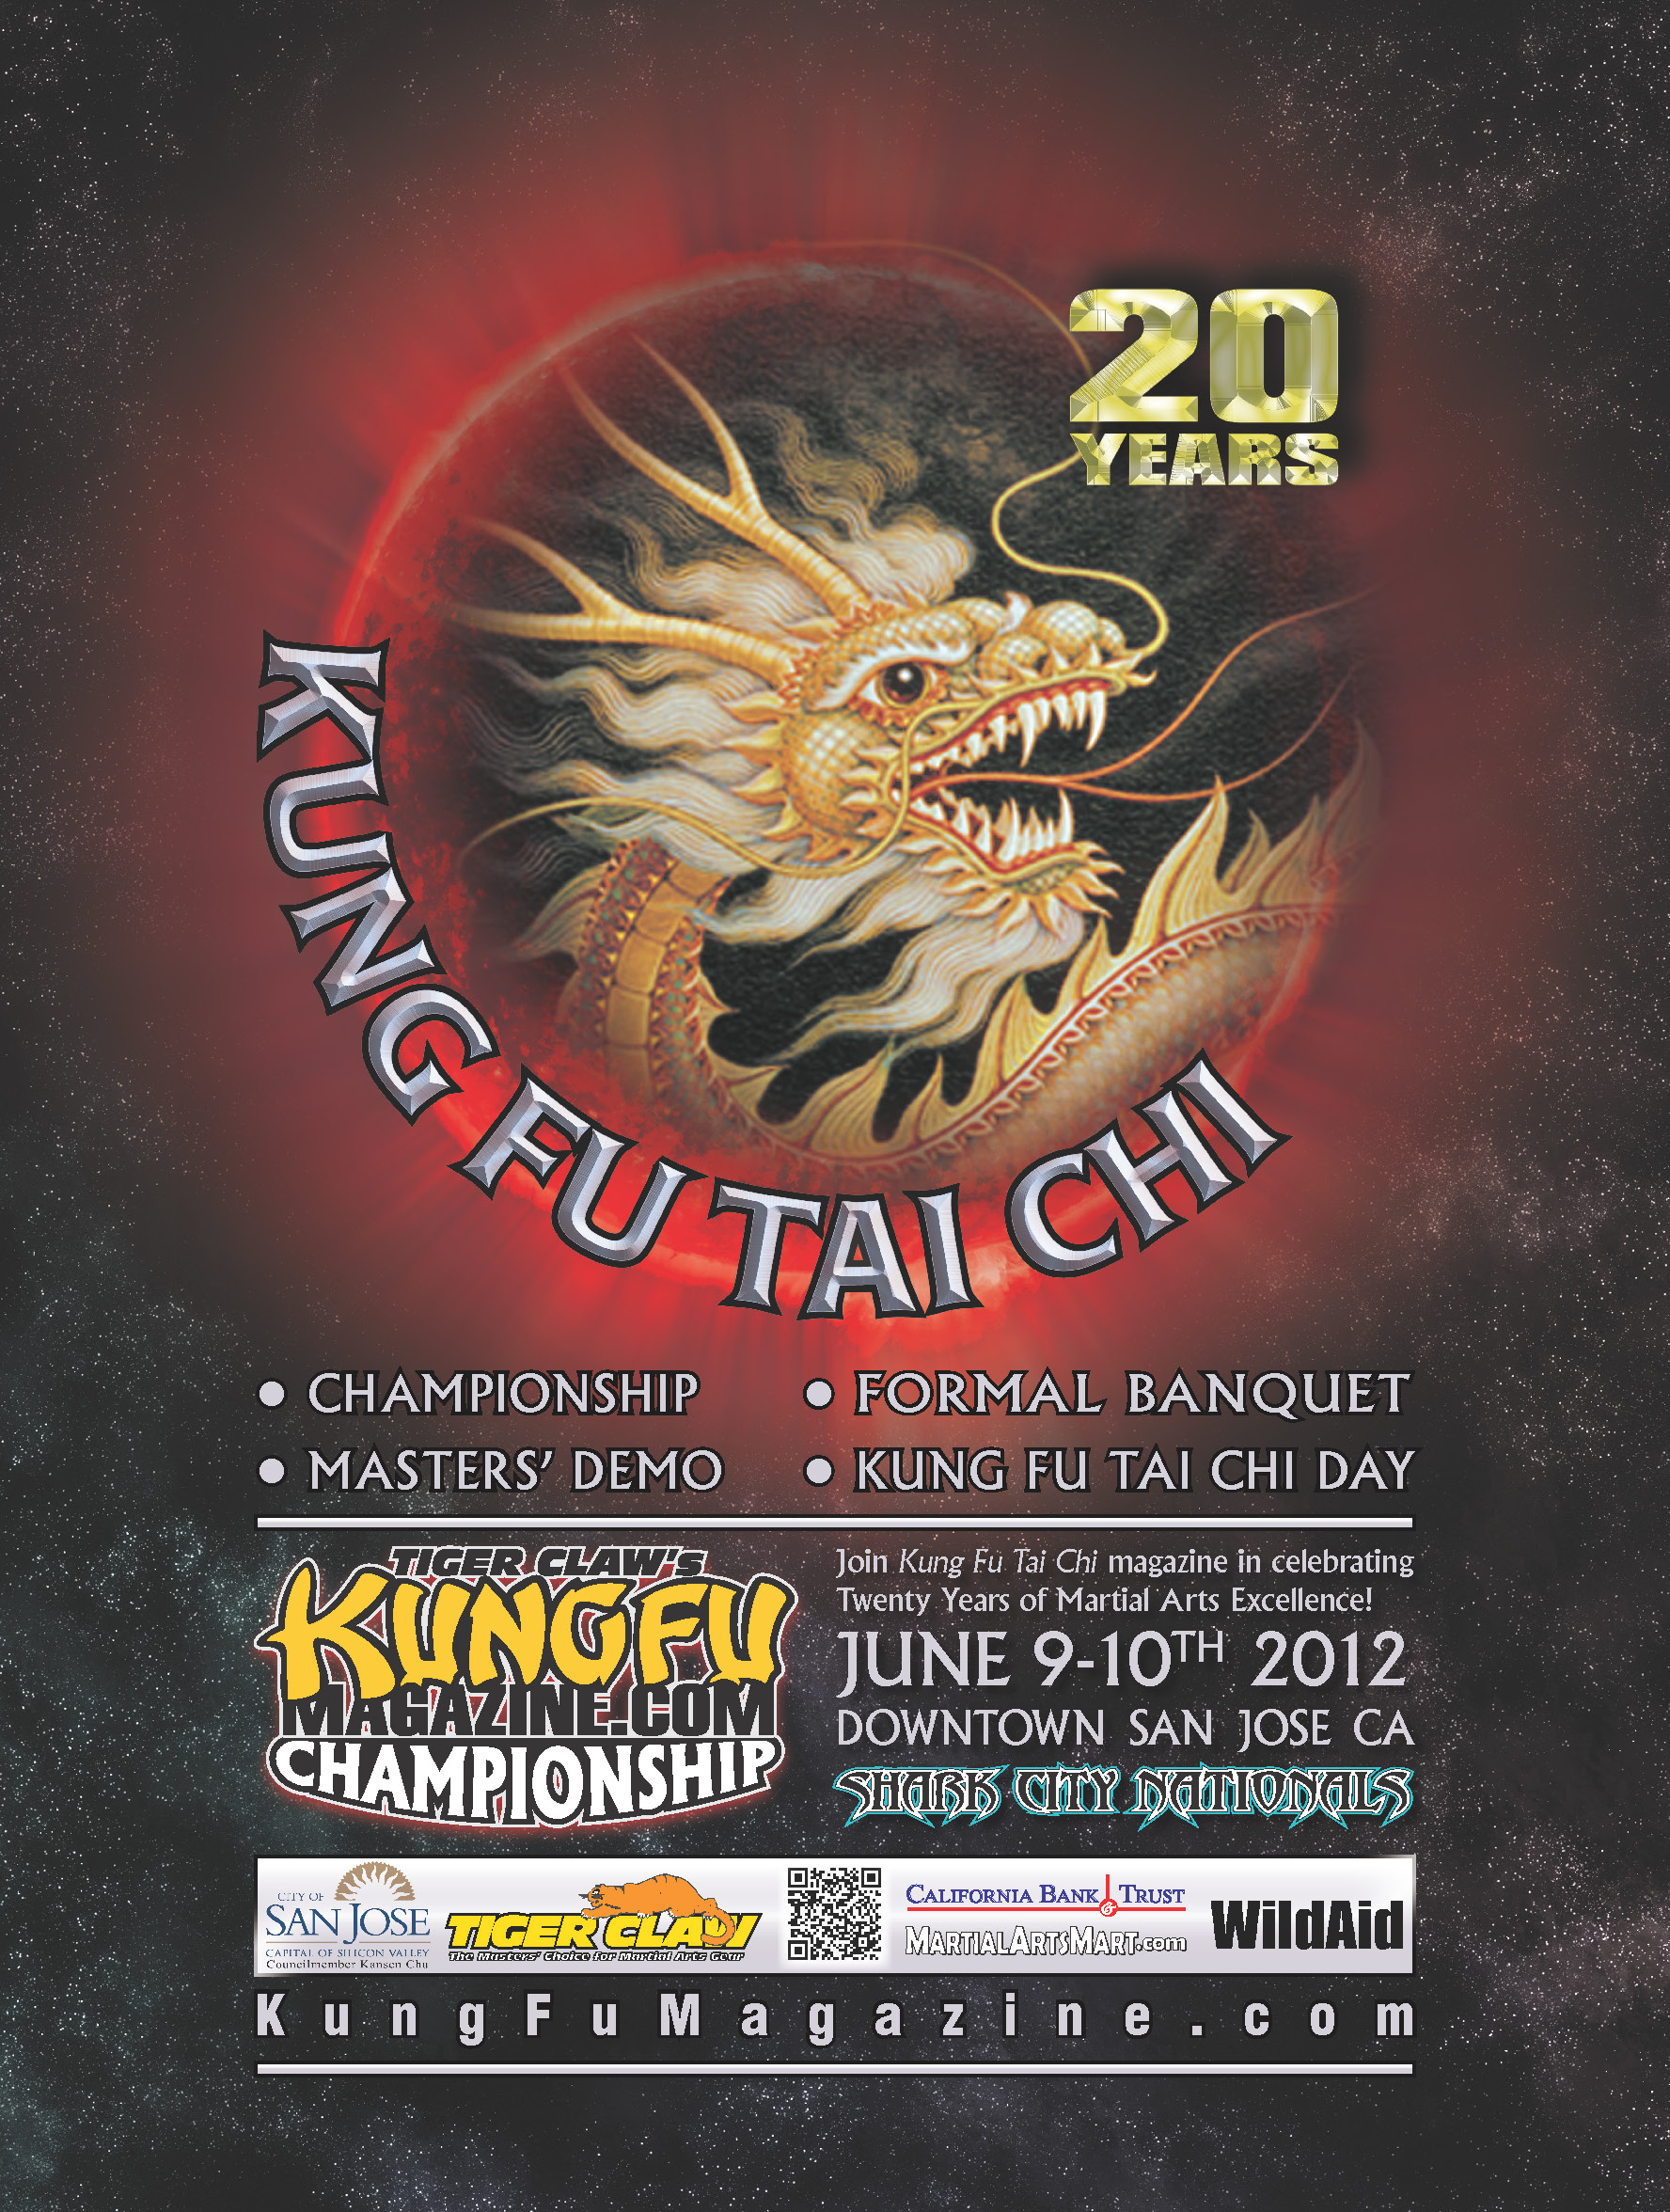 KFTC 20 Years poster